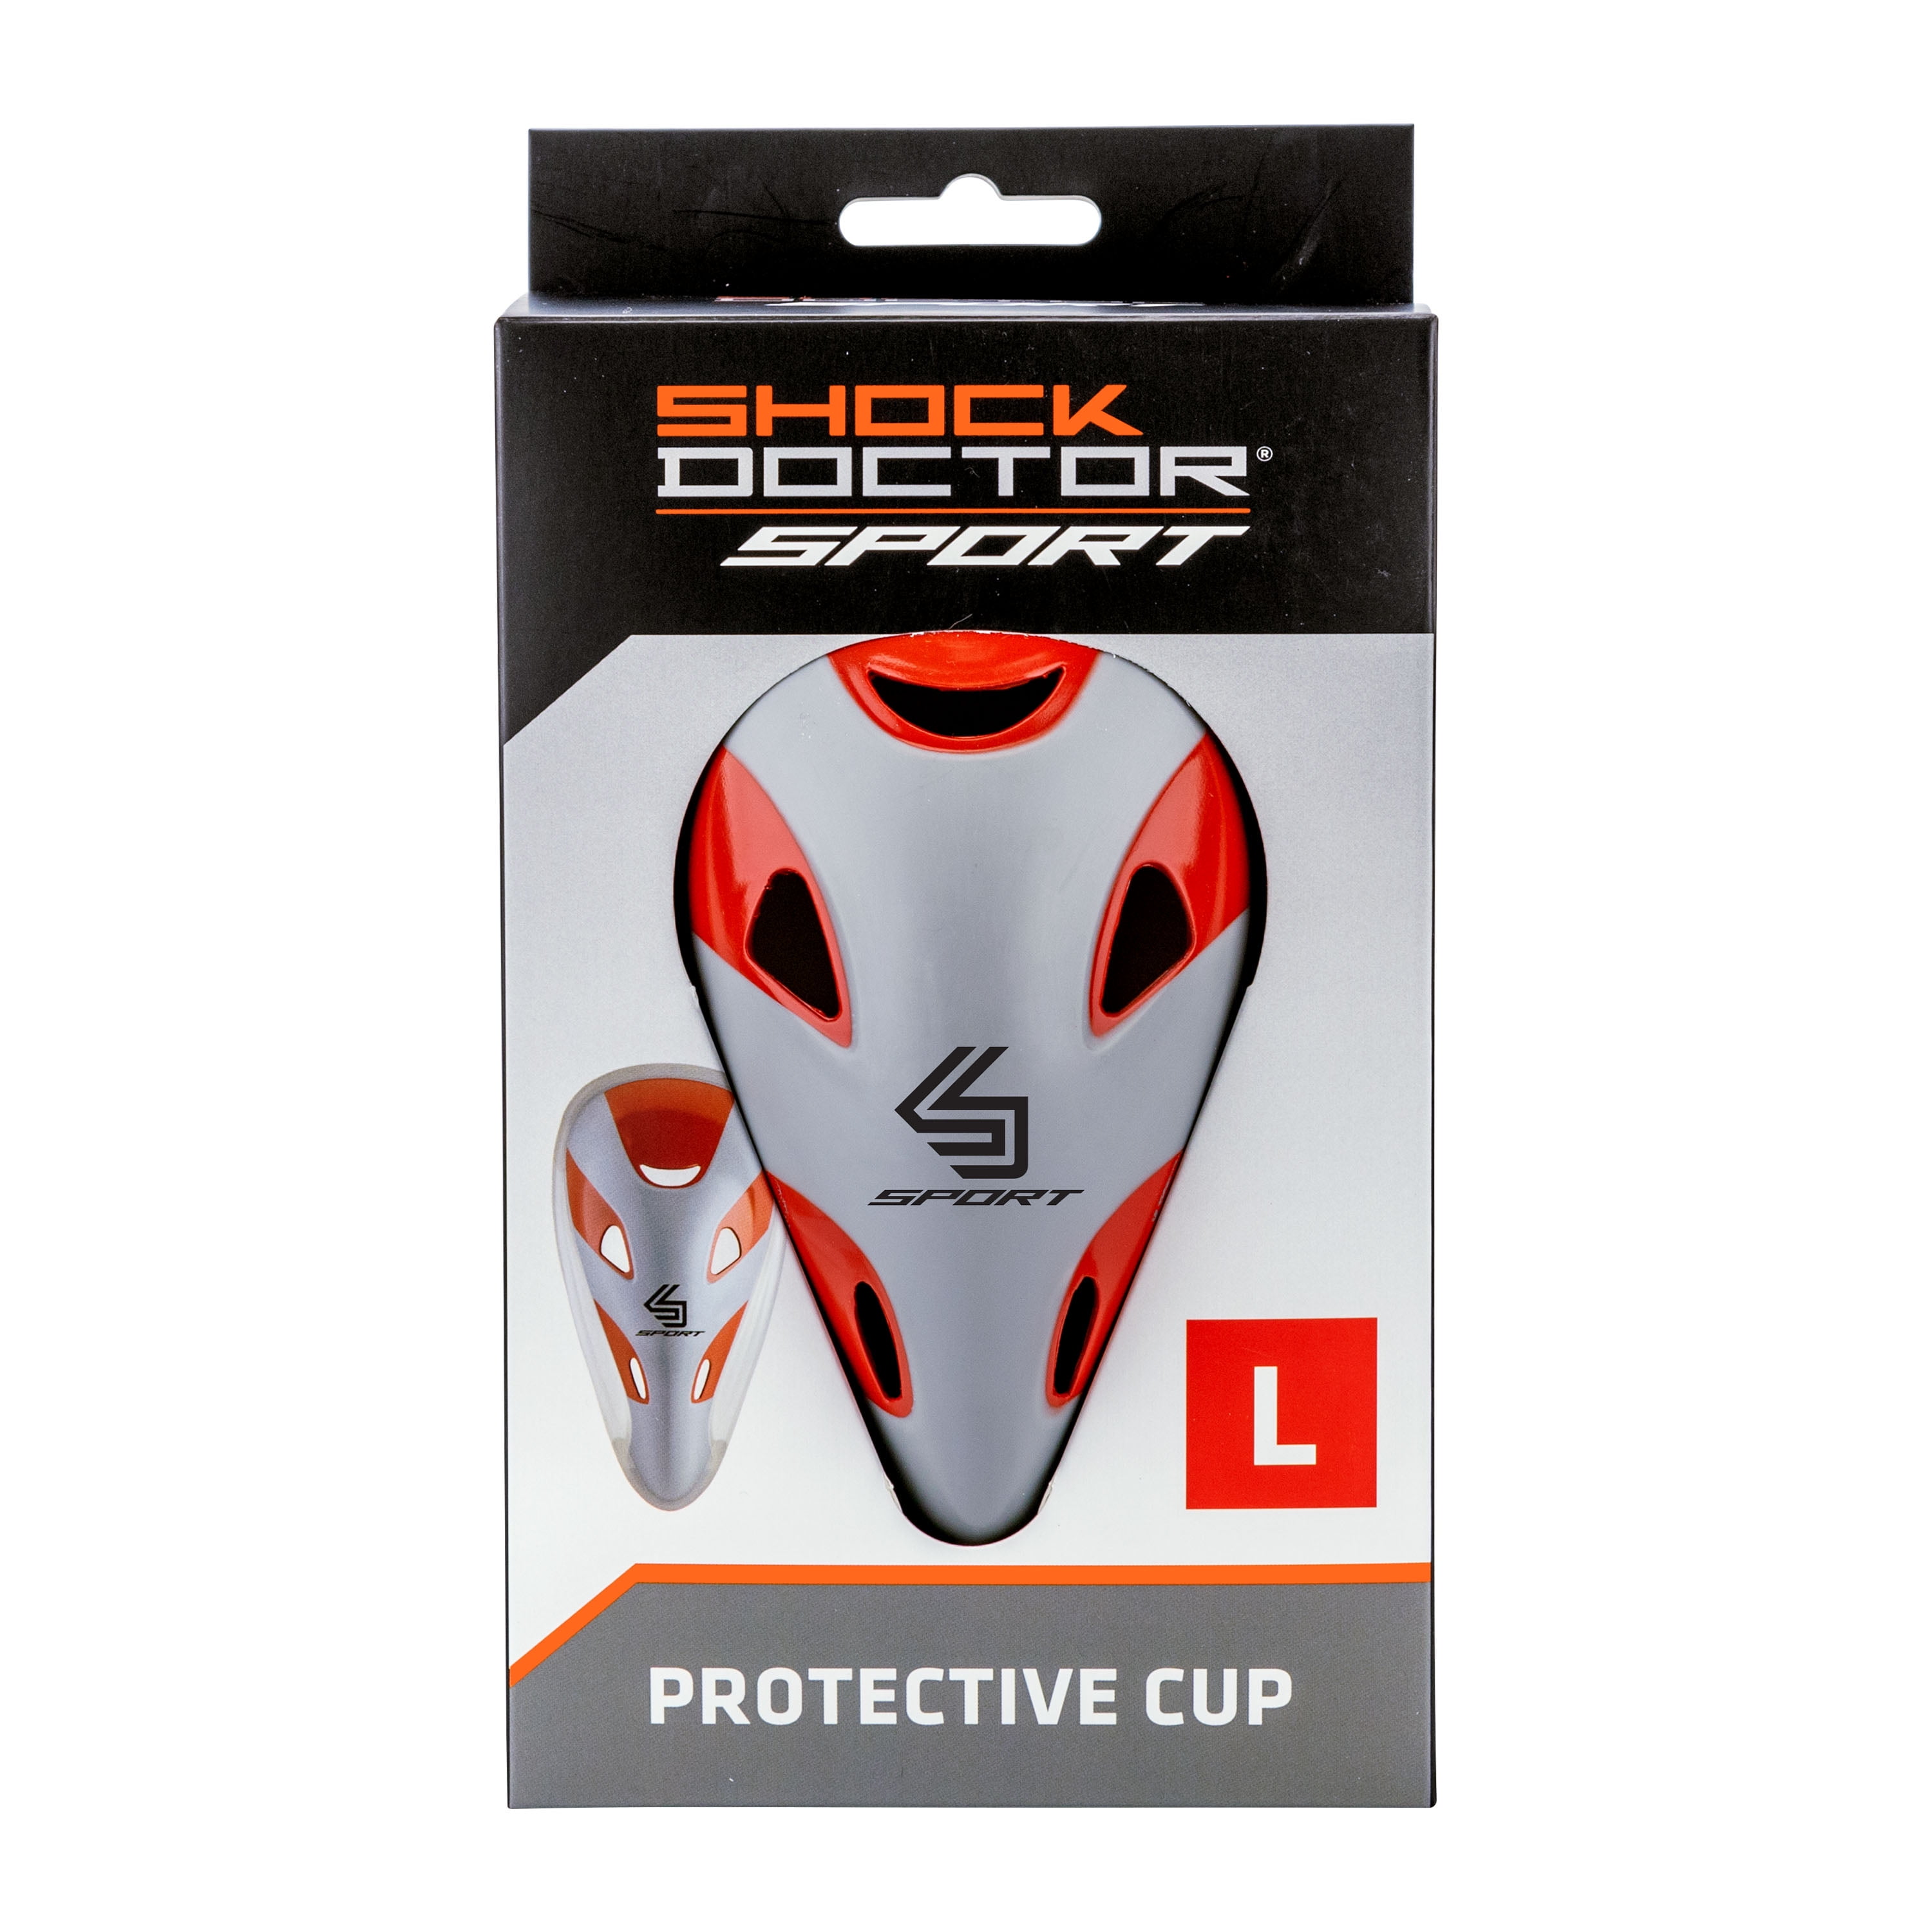 Shock Doctor: Sports Proctective Gear & Performance Apparel